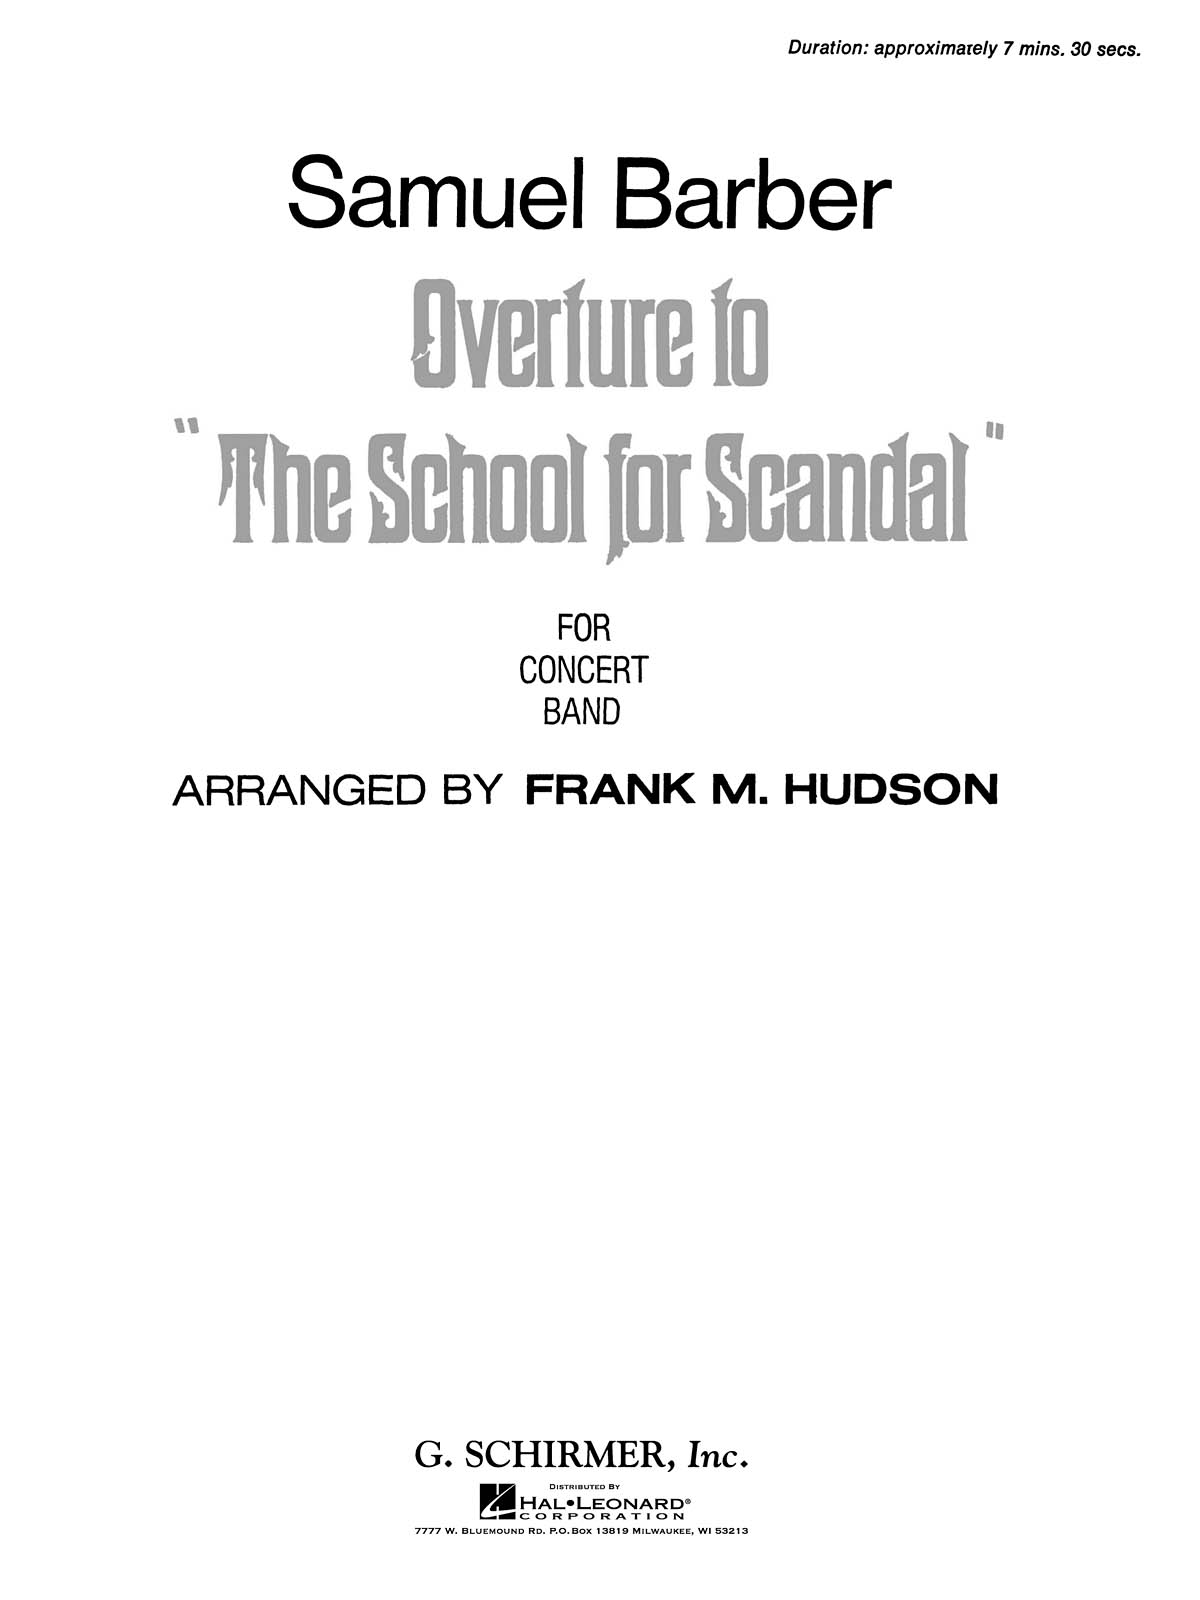 Samuel Barber: Overture To School For Scandal: Concert Band: Score